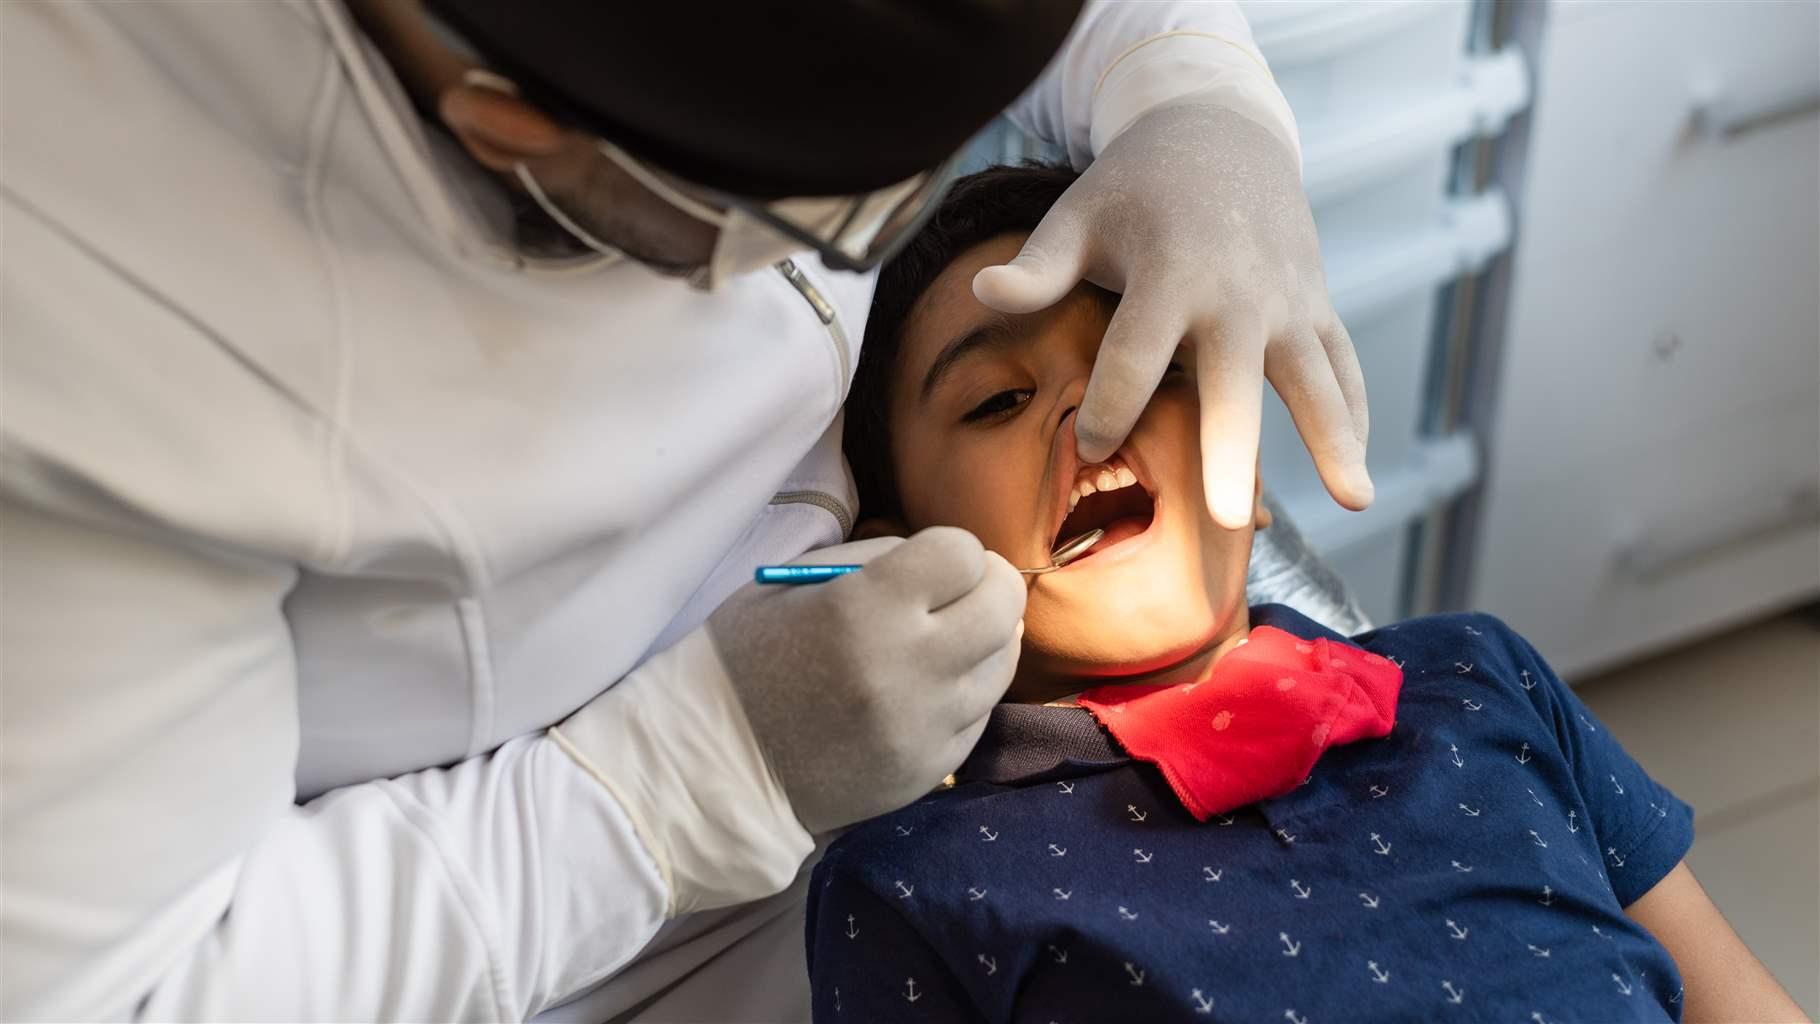 Dentist inspecting child's teeth